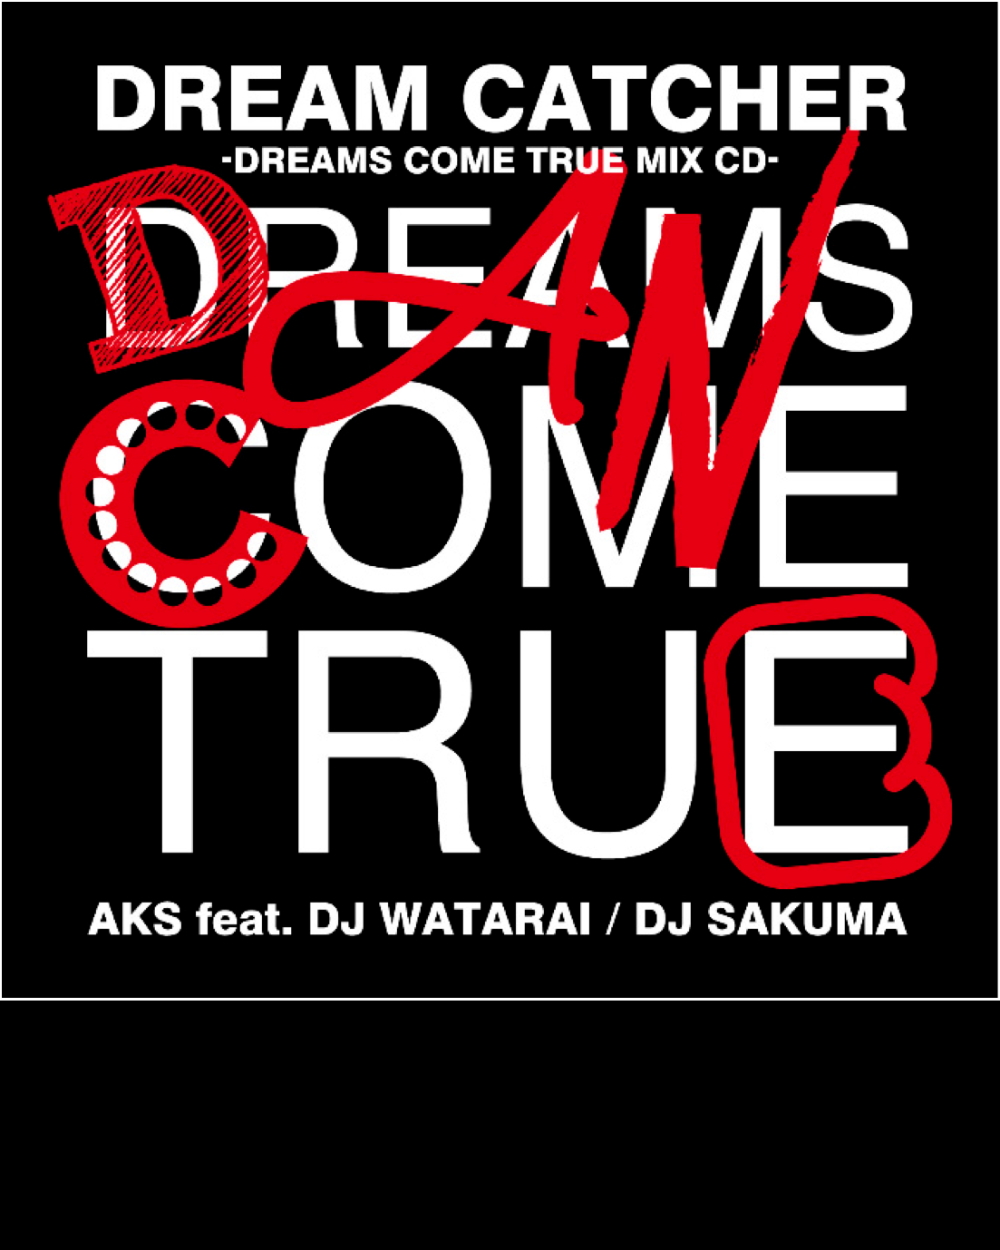 AKS feat DJ WATARAI/DJ SAKUMADREAM CATCHER -DREAMS COME TRUE MIX CD- AKS feat. DJ WATARAI / DJ SAKUMA